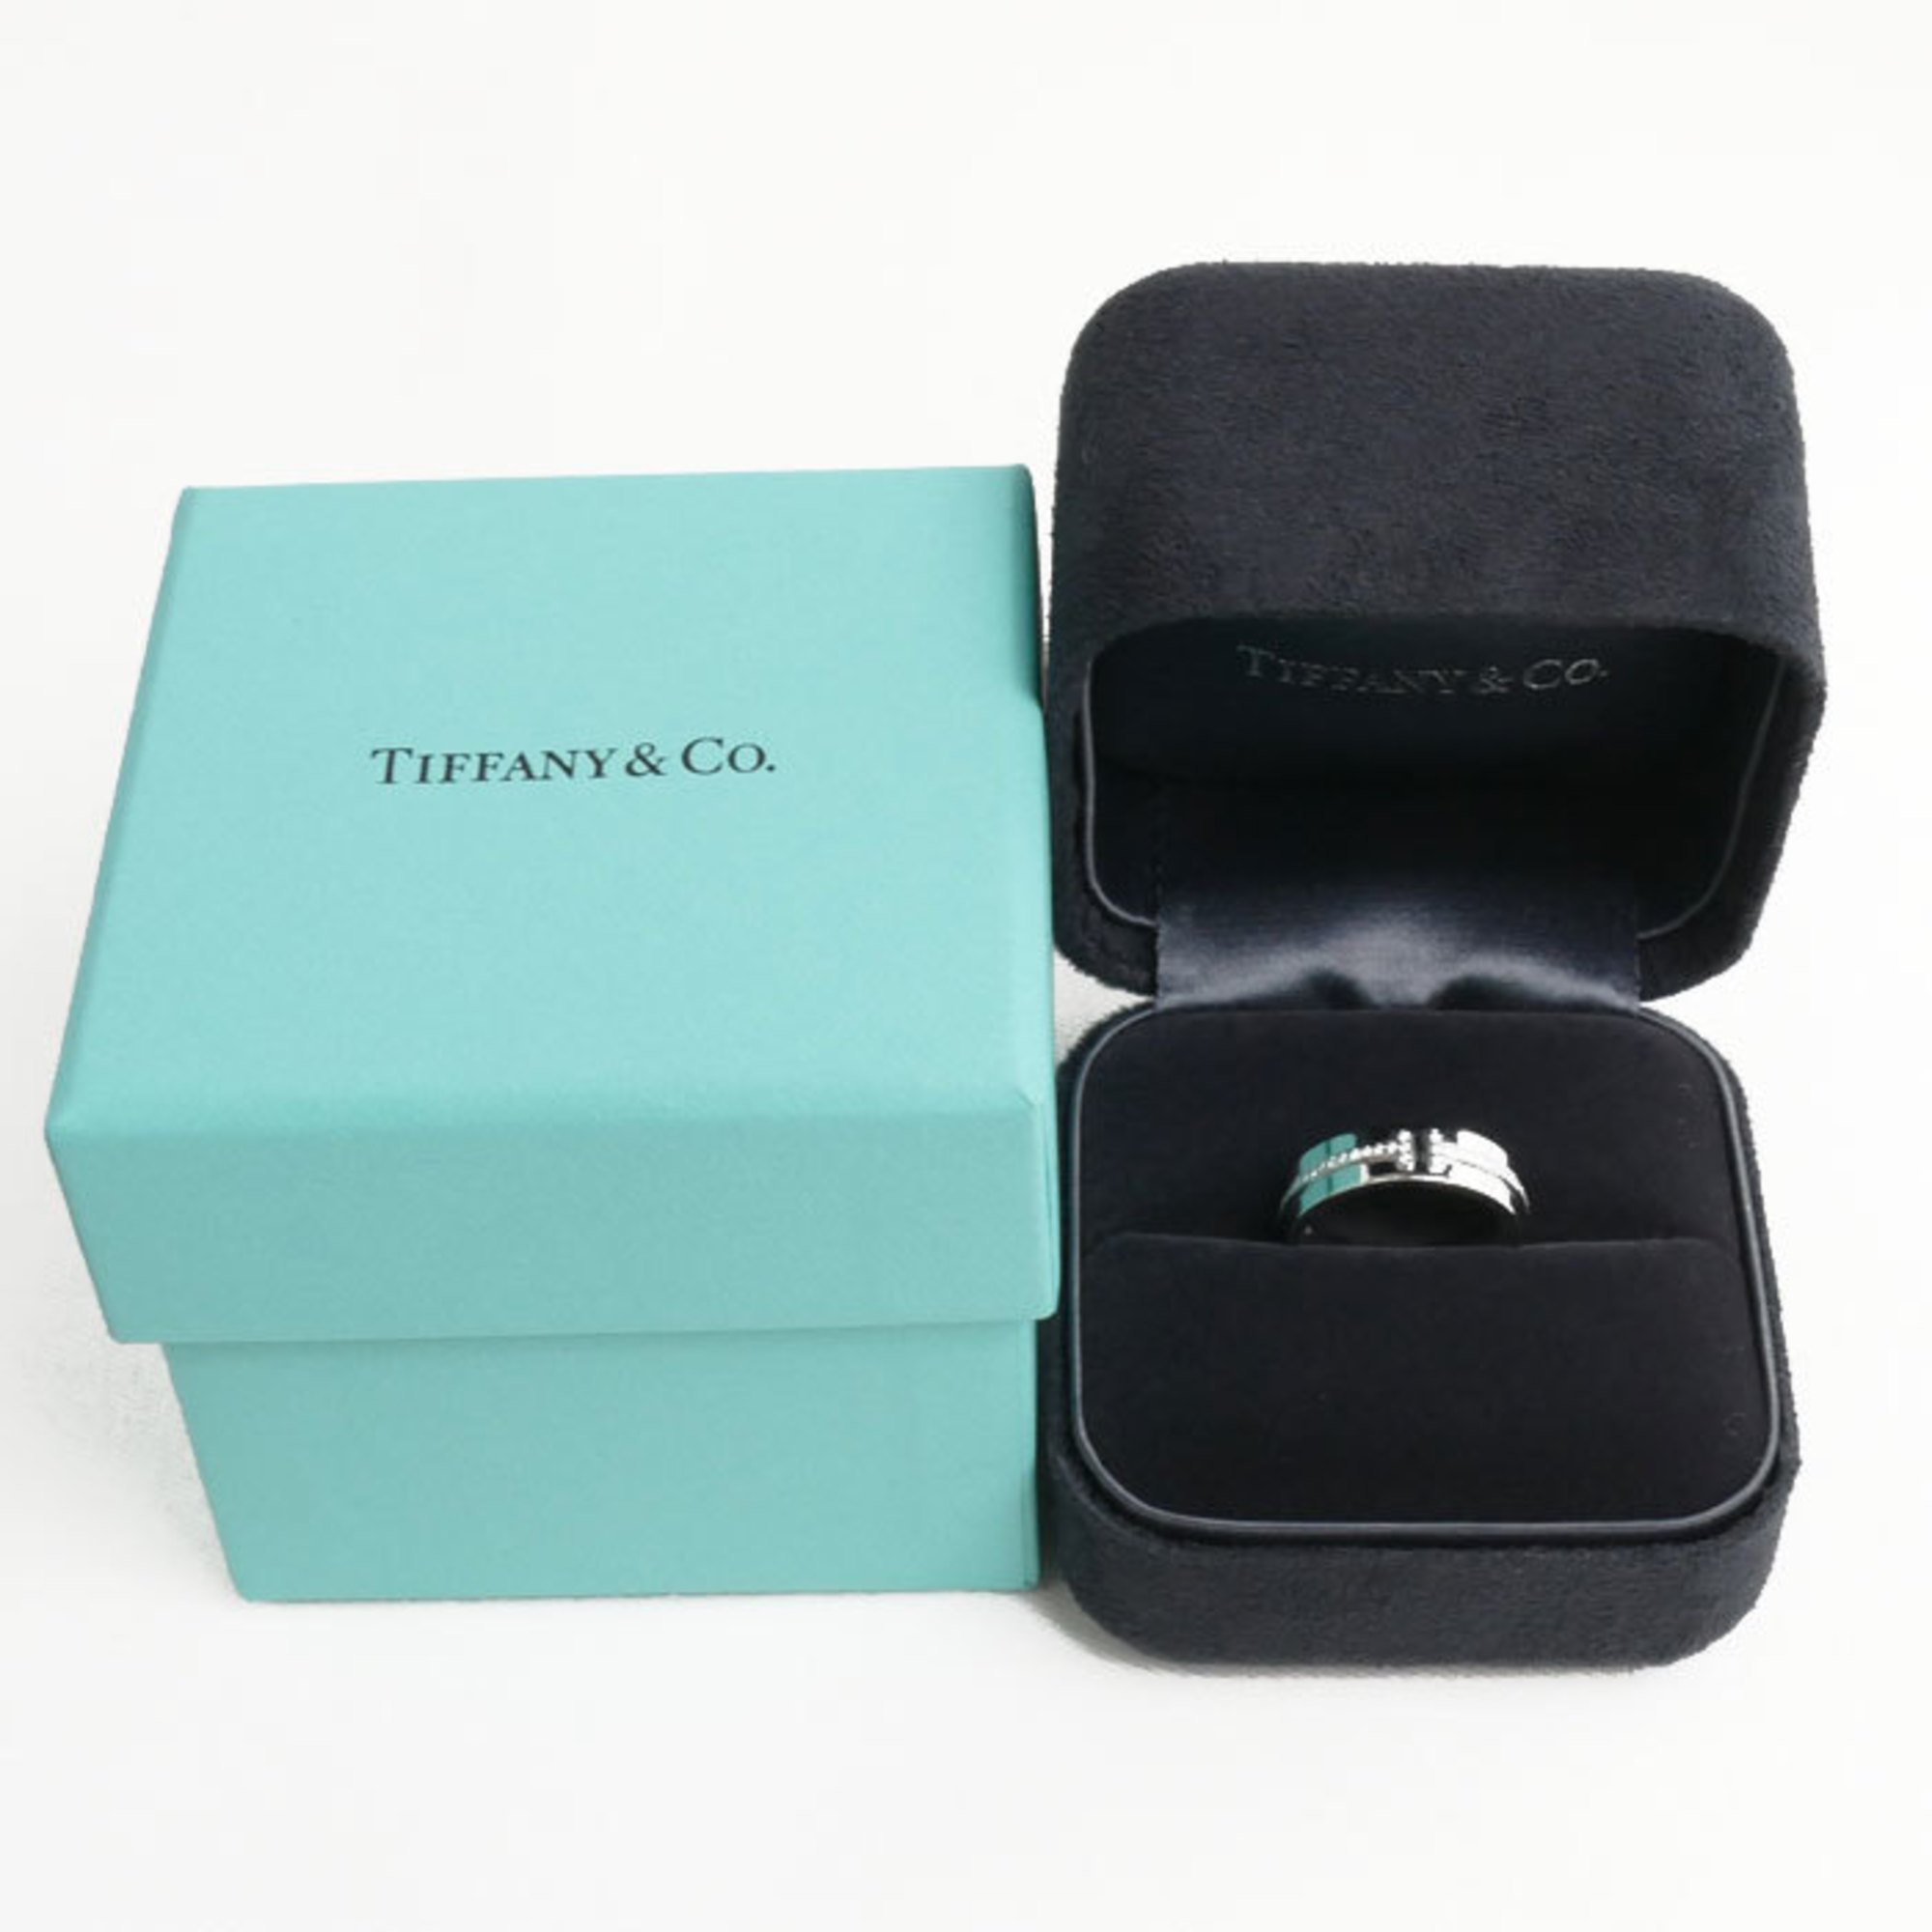 TIFFANY&Co. Tiffany K18WG White Gold T TWO Wide Diamond Ring 60150930 Size 10 7.1g Women's